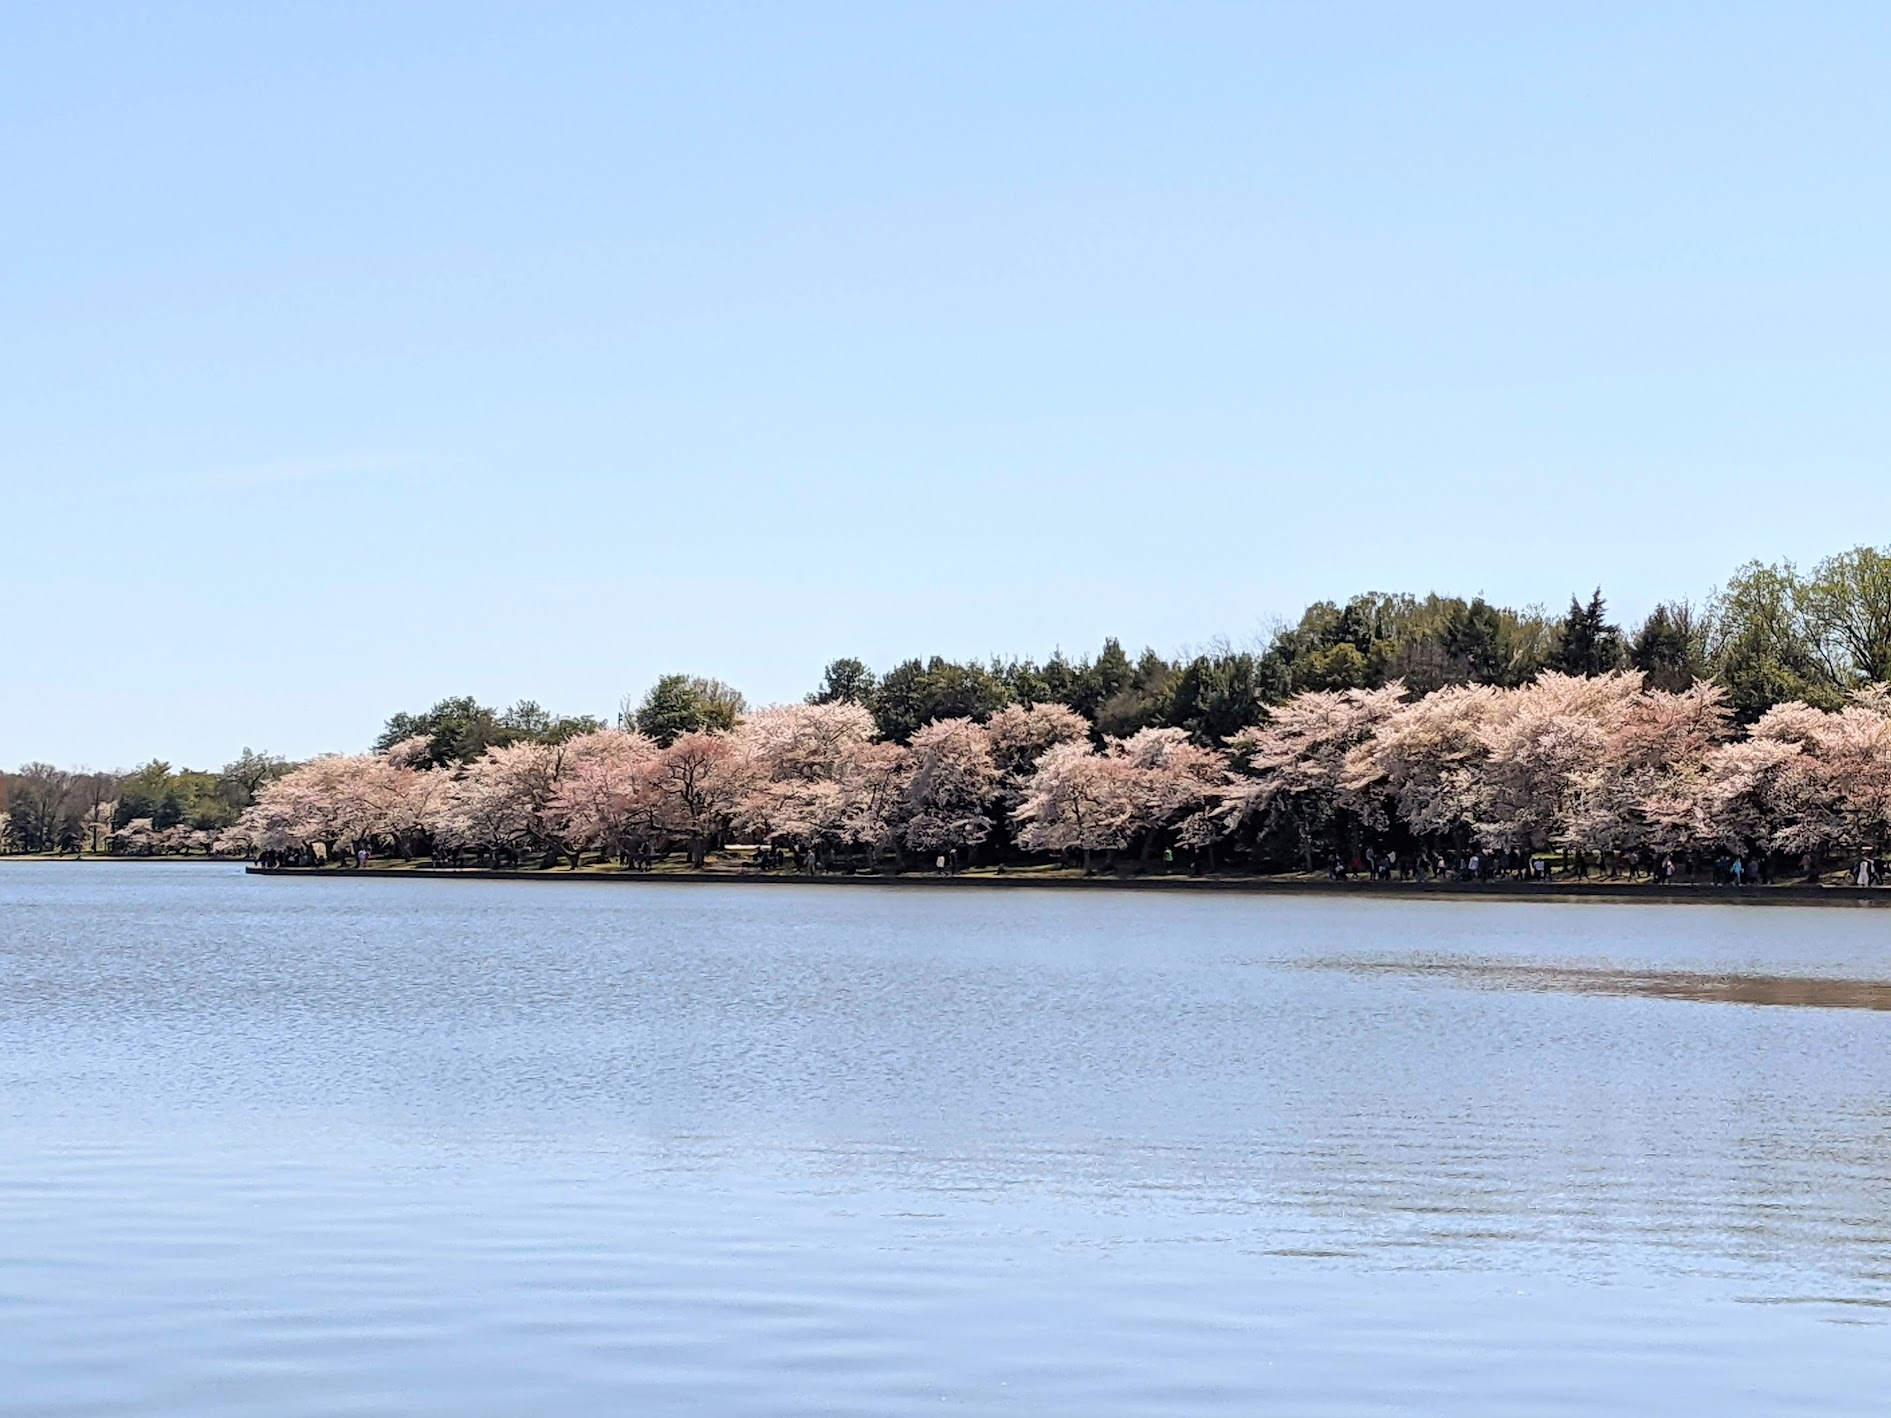 Cherry blossom trees, Tidal Basin, Washington D.C. - Japanse kerselaars